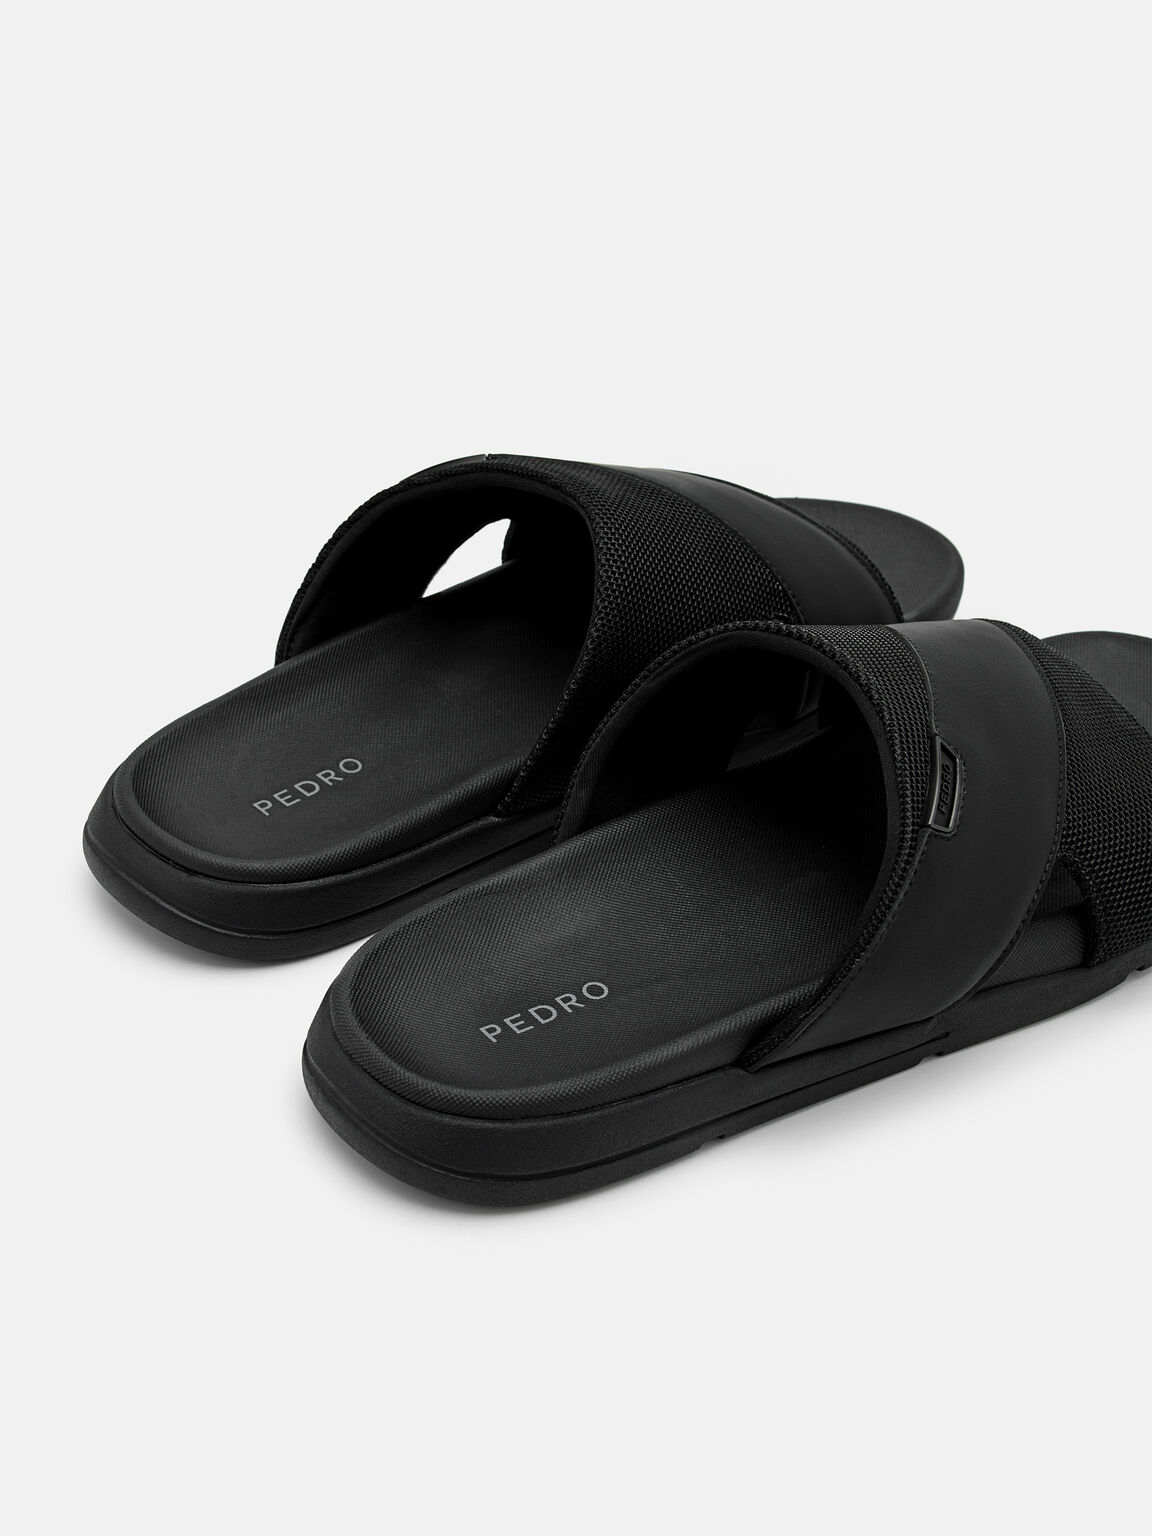 Mesh Slide Sandals, Black